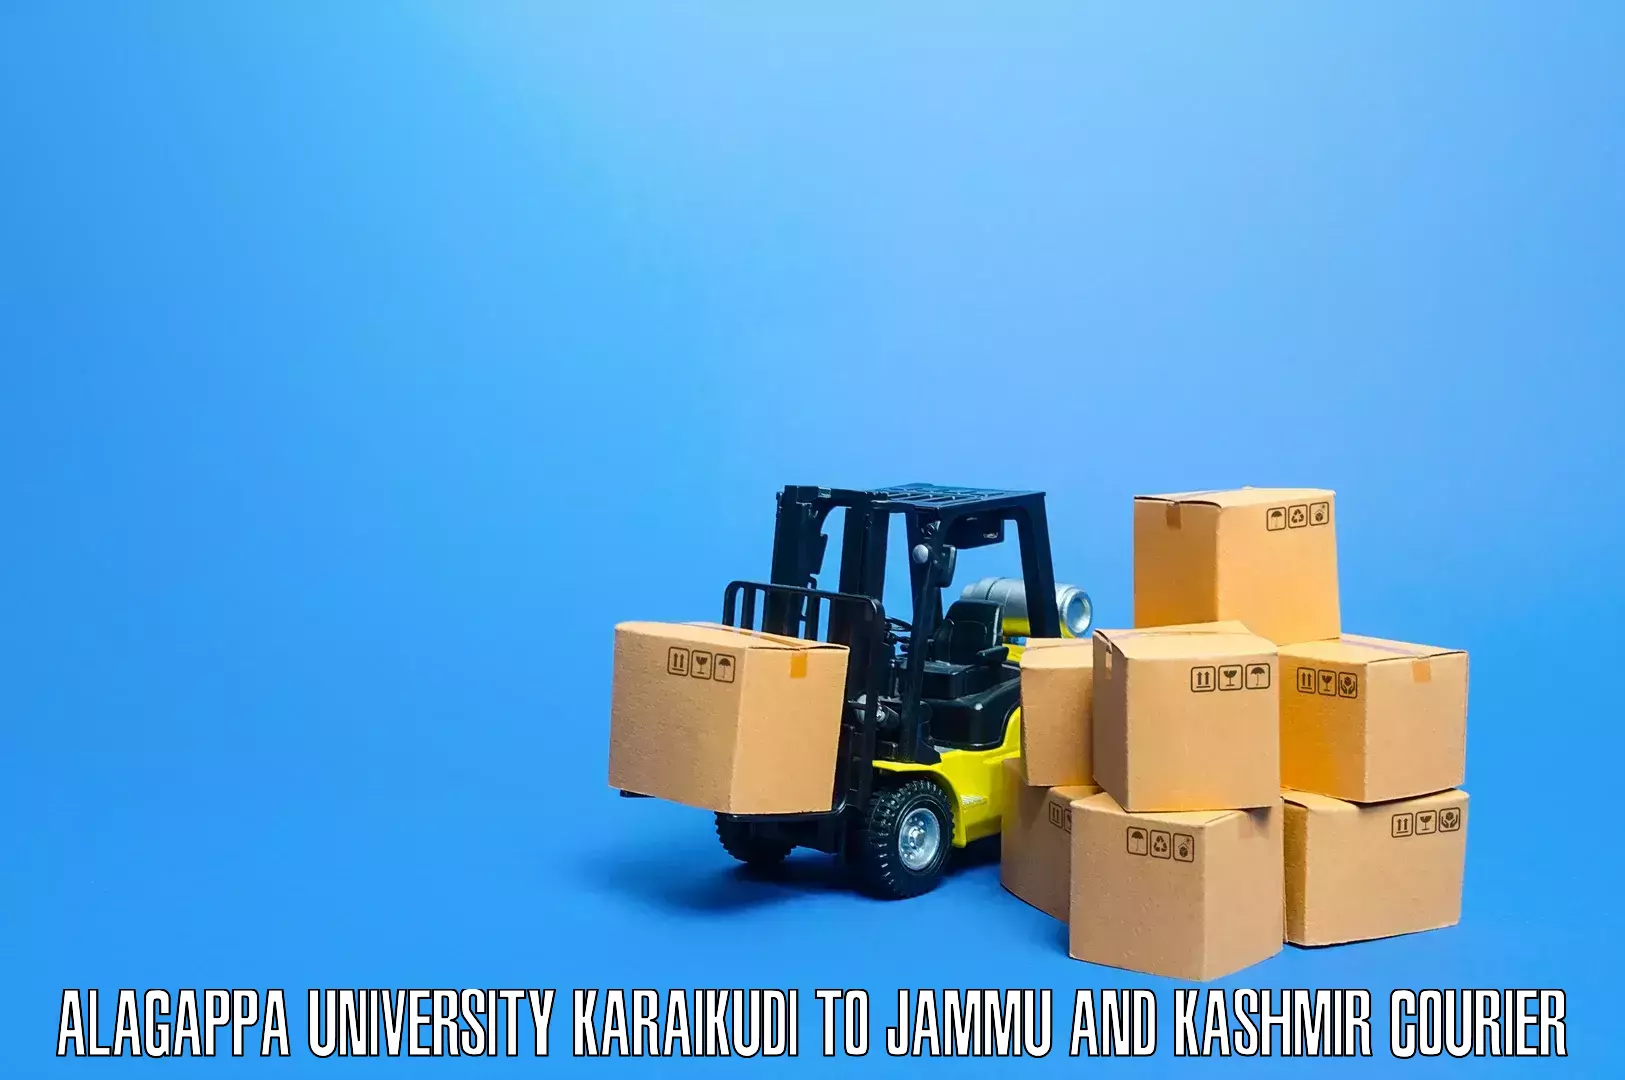 Professional moving company Alagappa University Karaikudi to Jammu